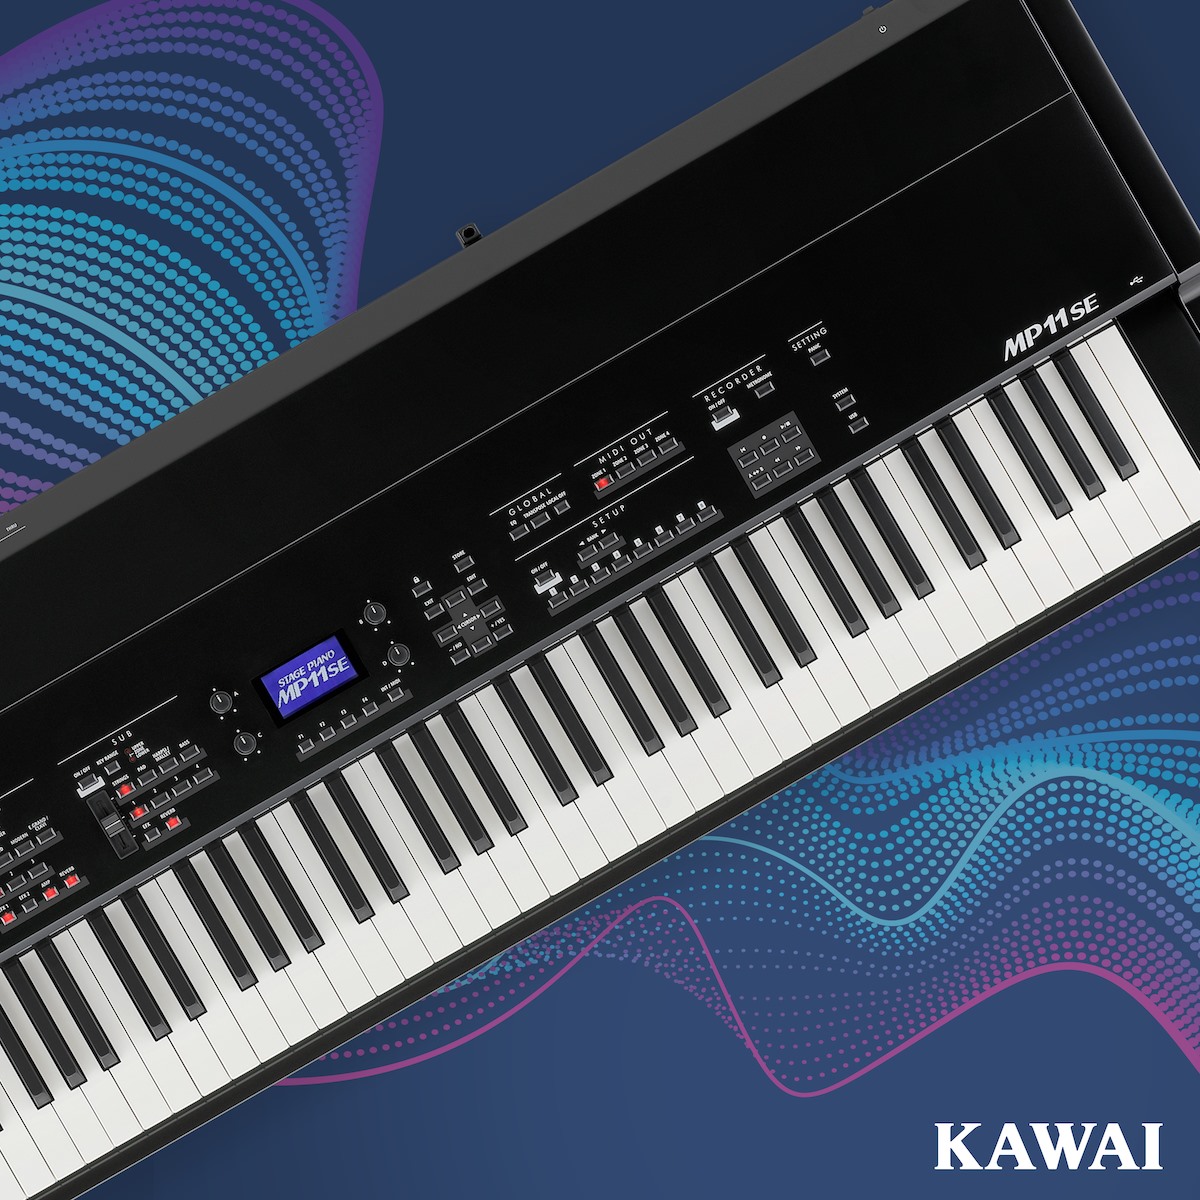 PIANO DIGITAL KAWAI MP11SE